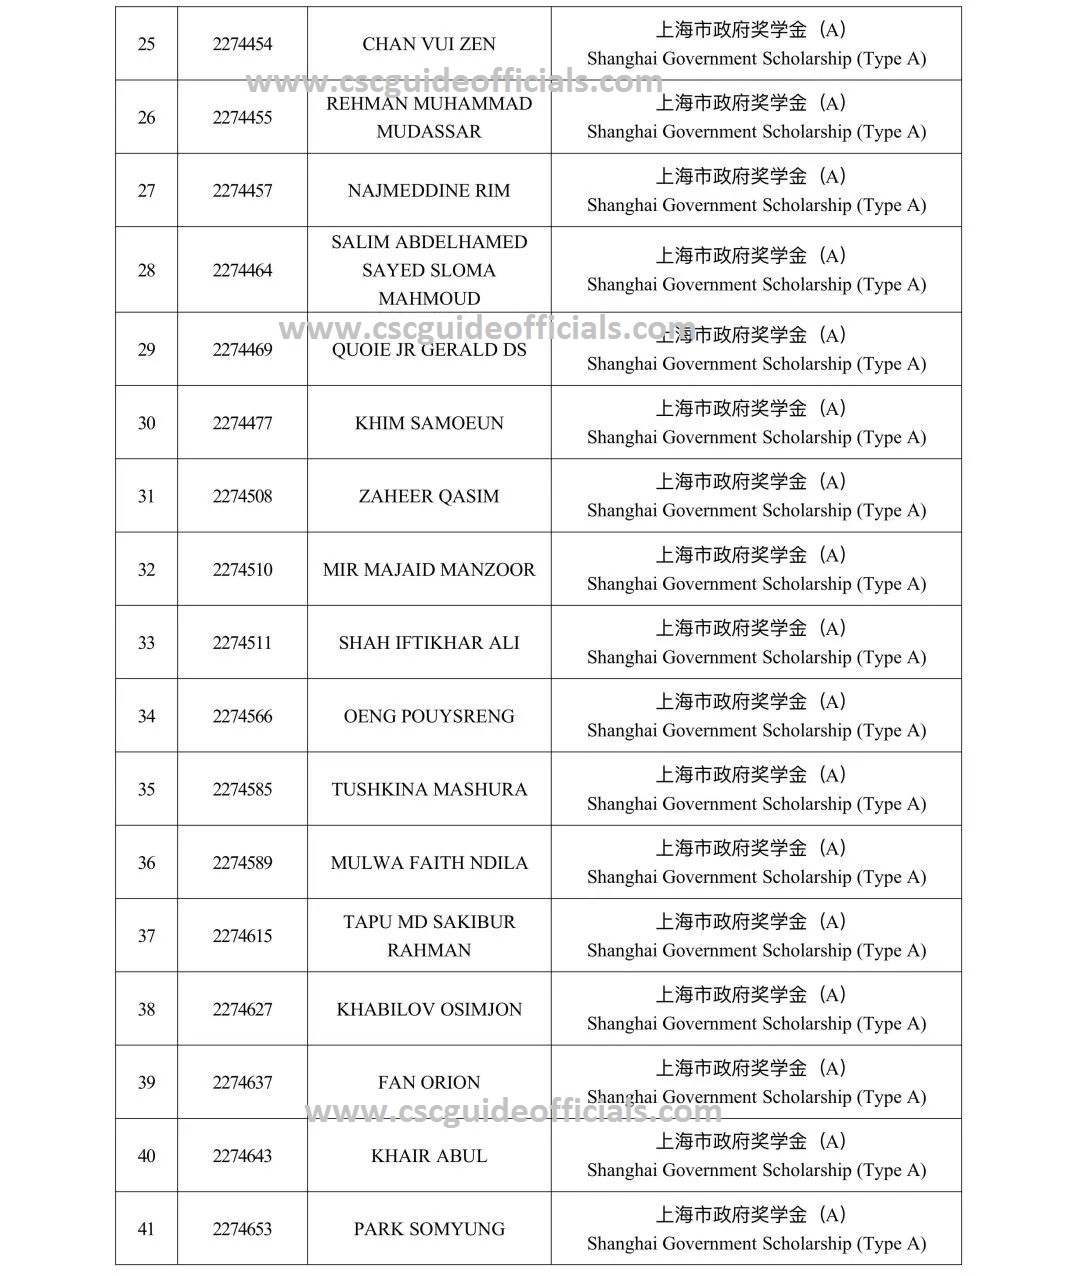 Tongji University Shanghai Government Scholarship Result 2022-2023 Page 3